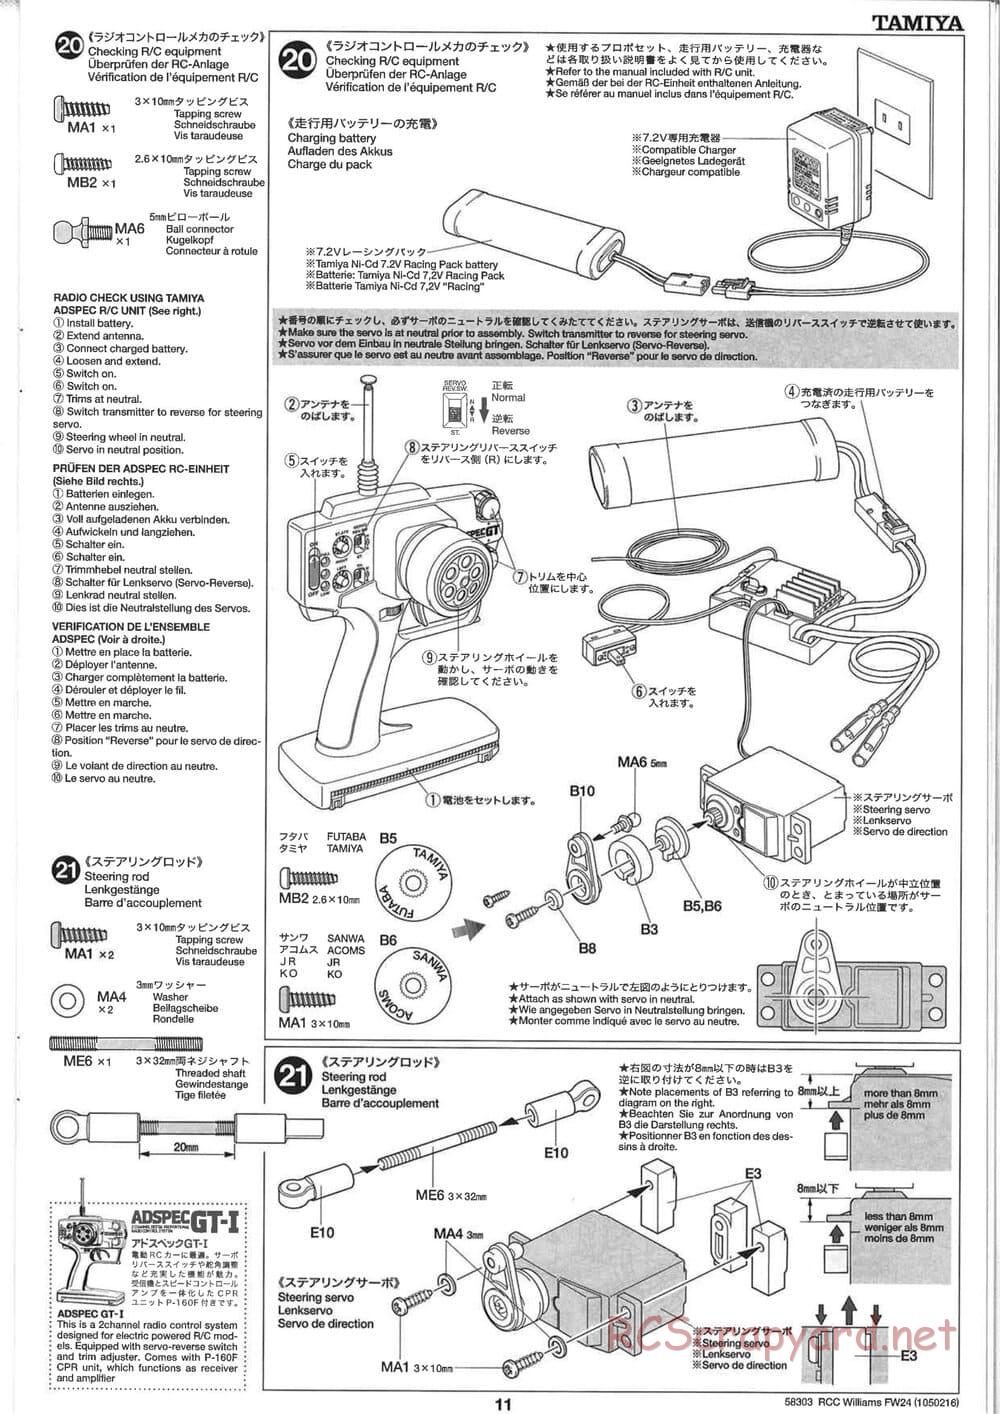 Tamiya - Williams F1 BMW FW24 - F201 Chassis - Manual - Page 11